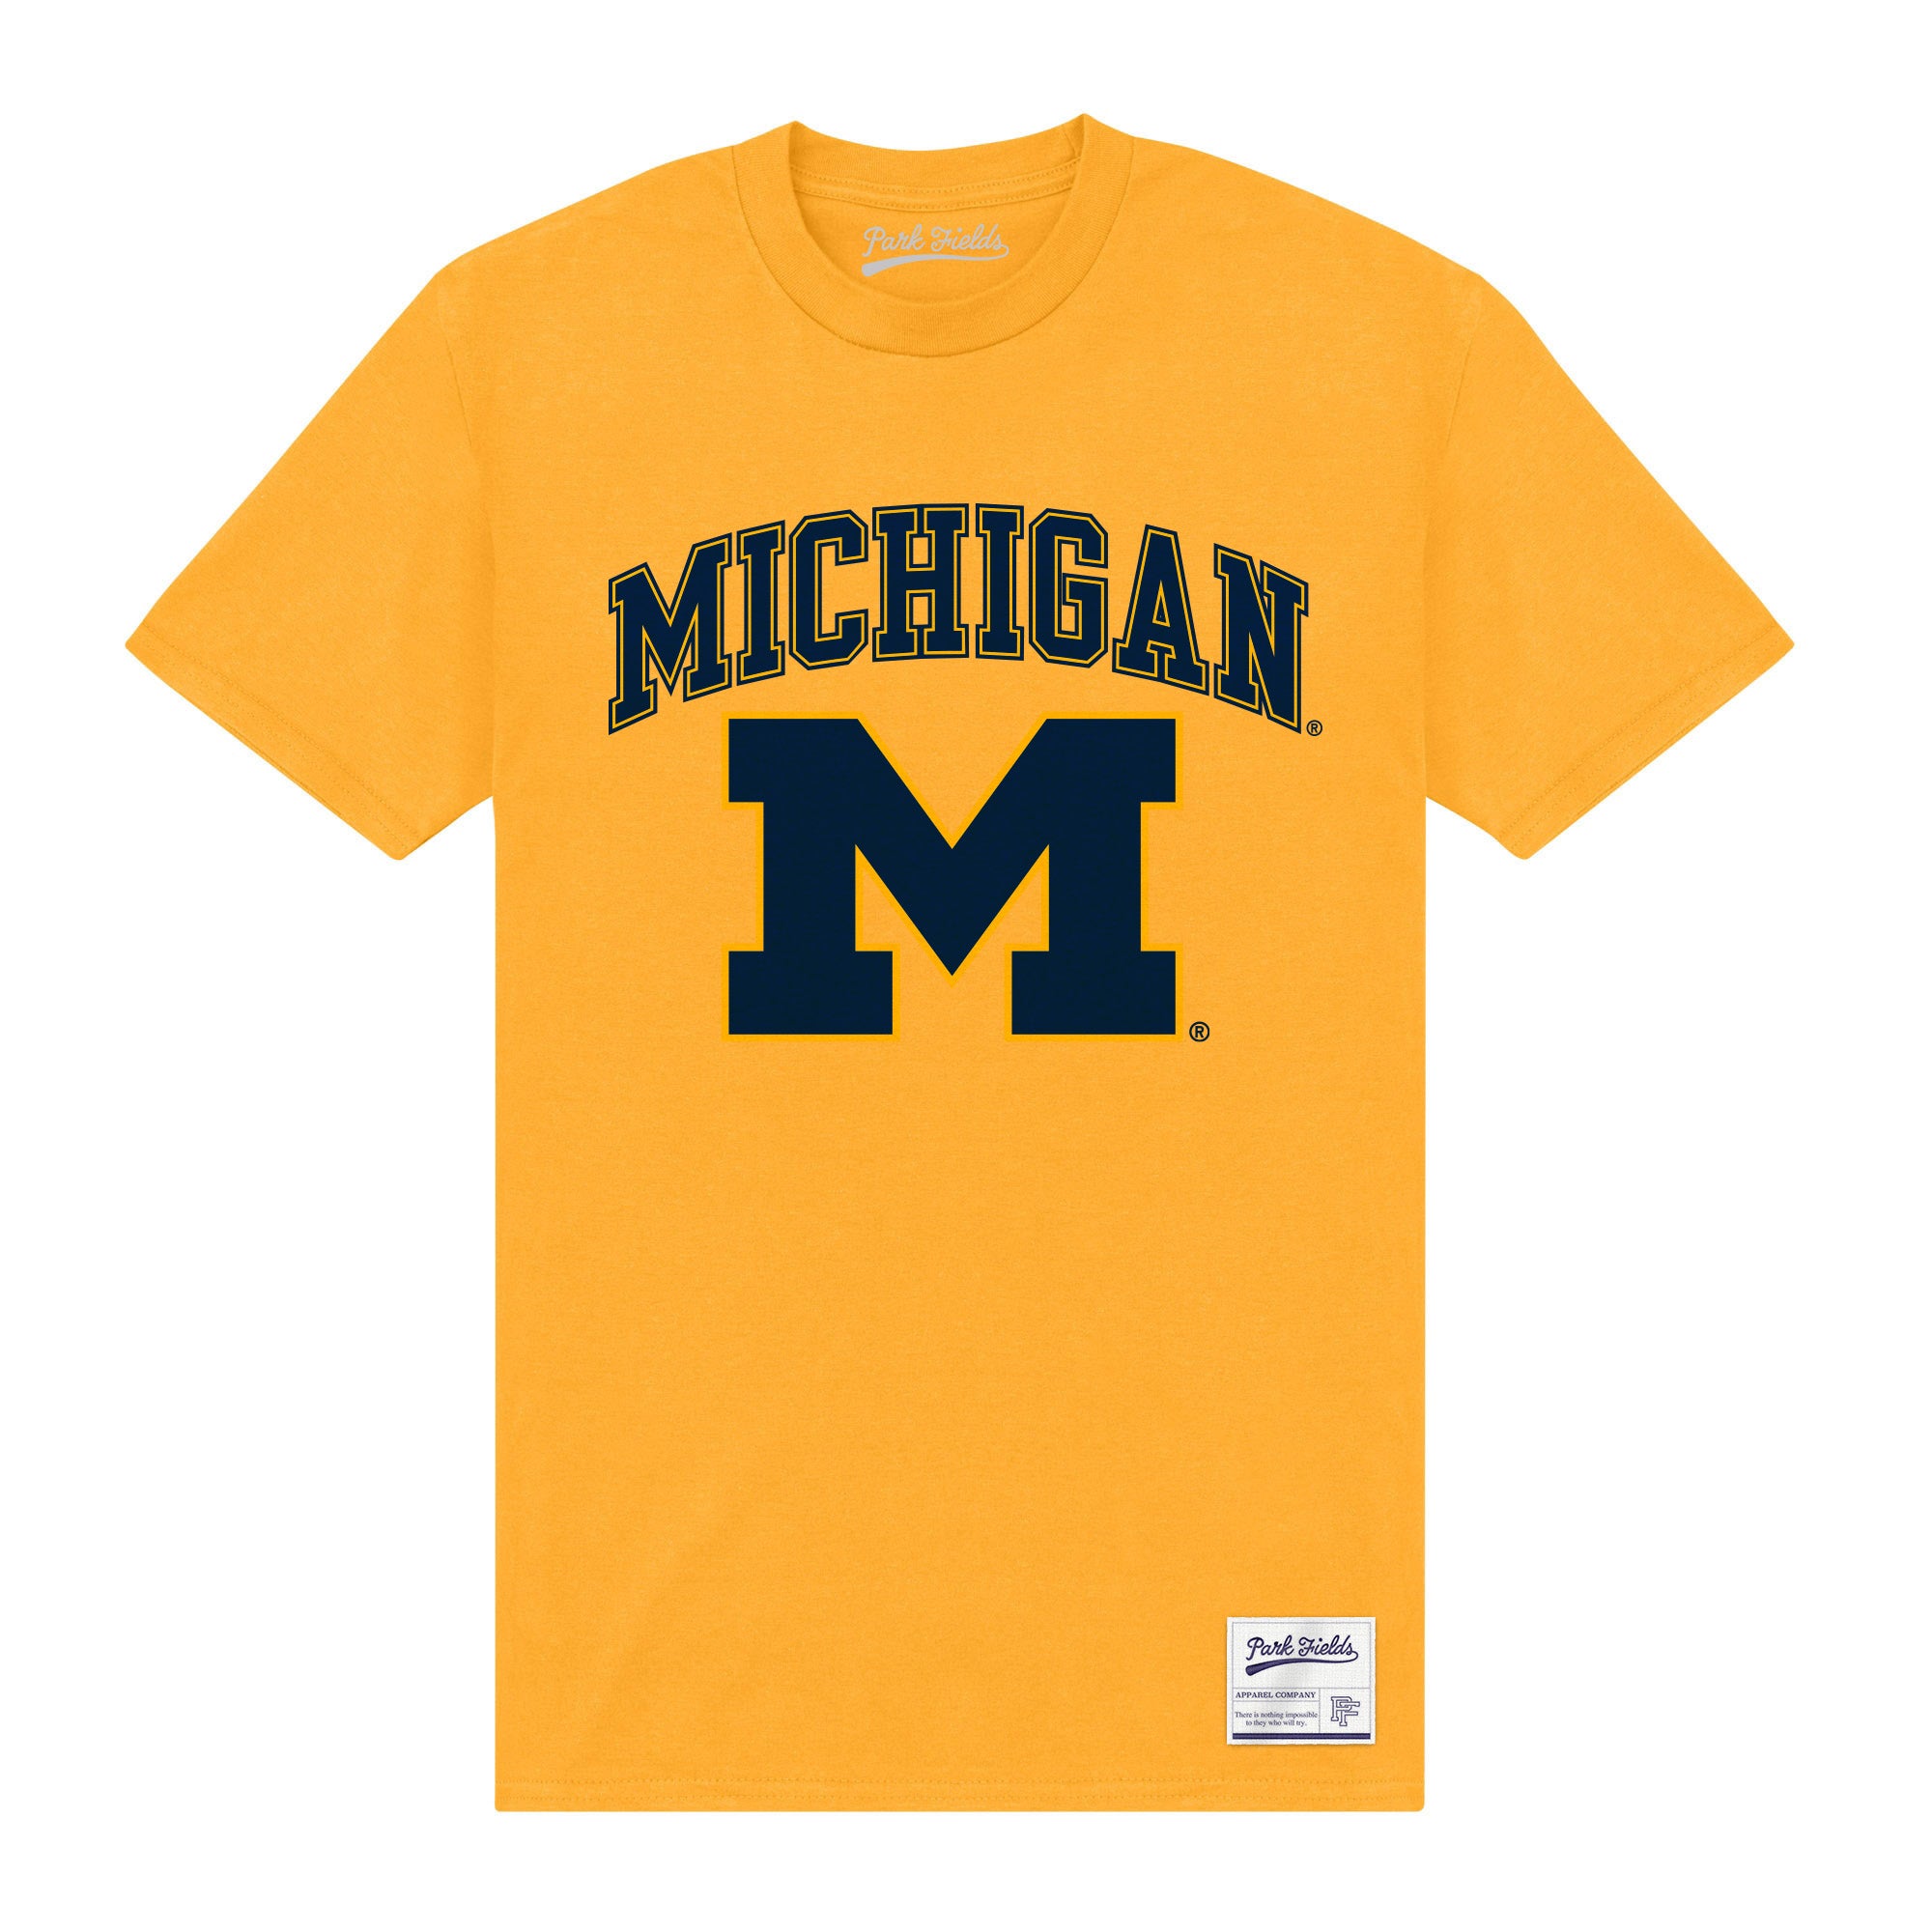 Michigan M Gold T-Shirt